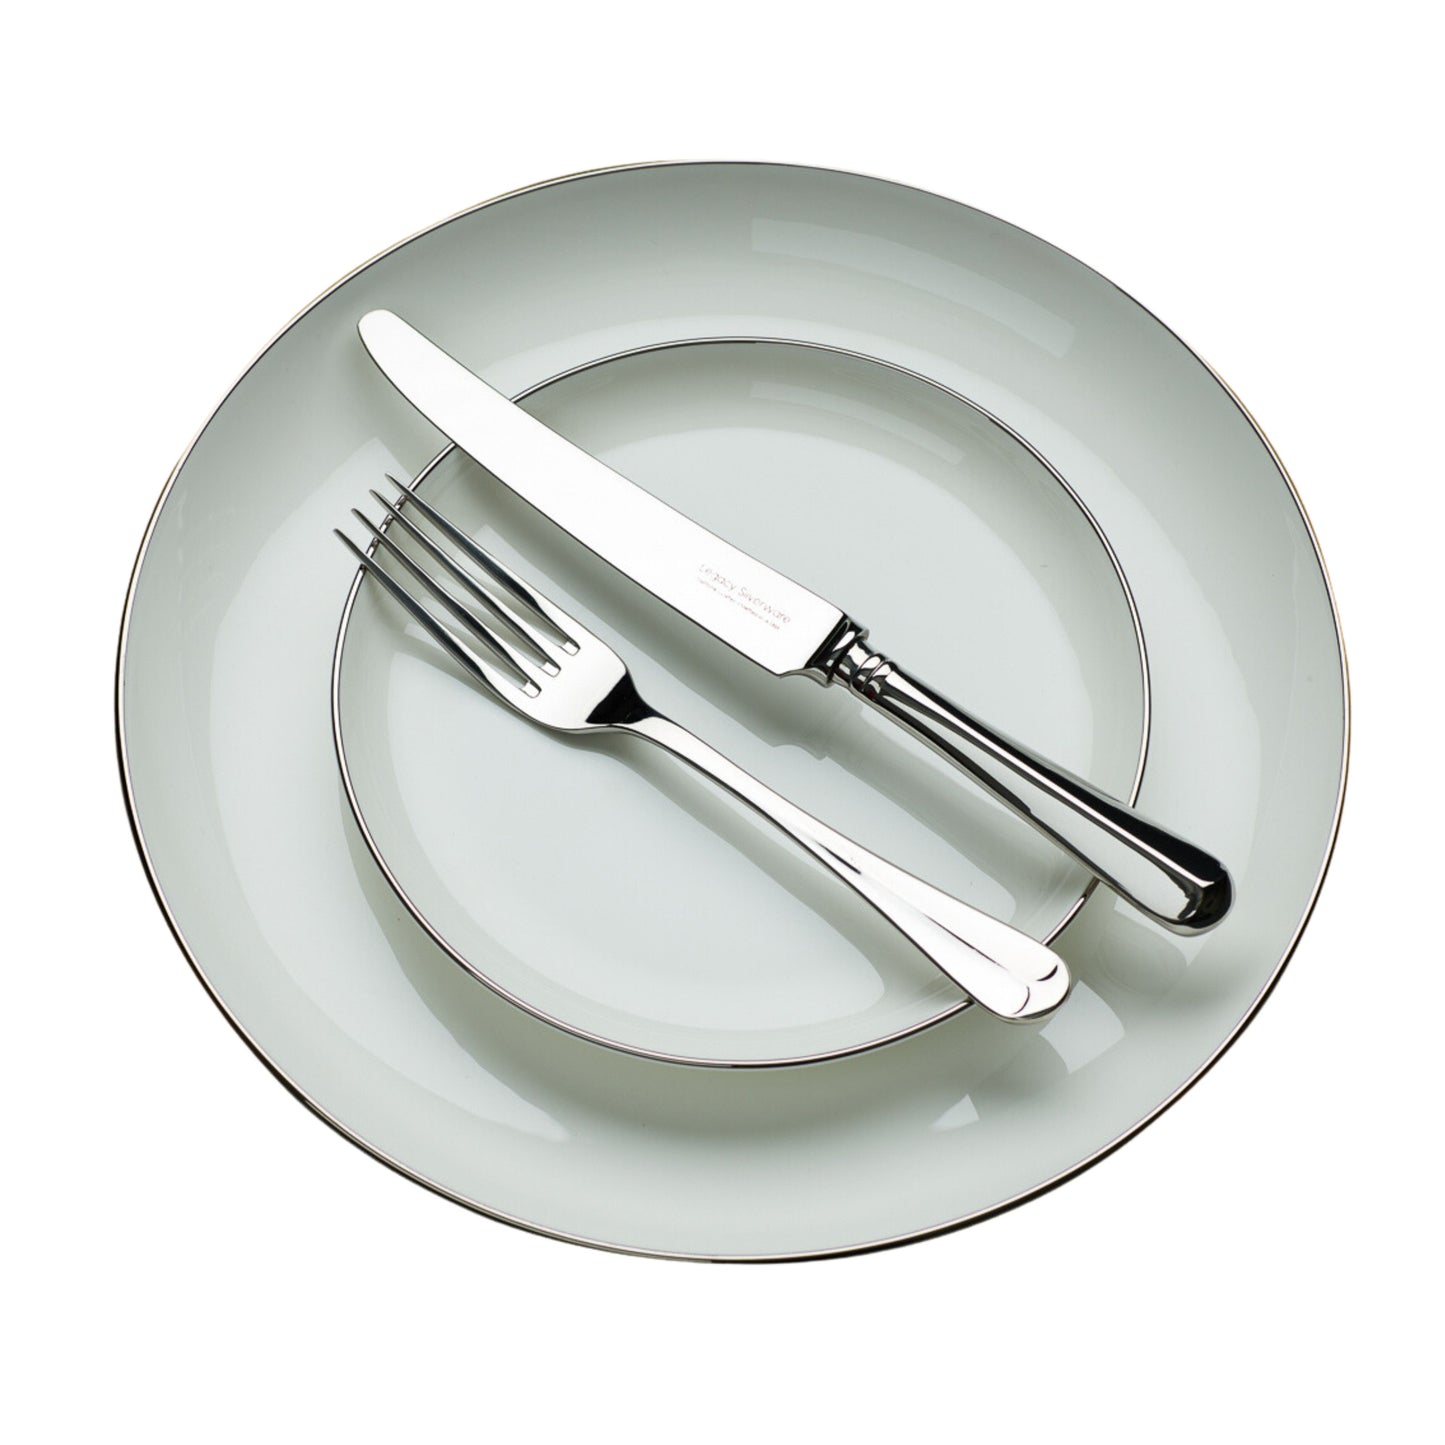 Rattail flatware cutlery set